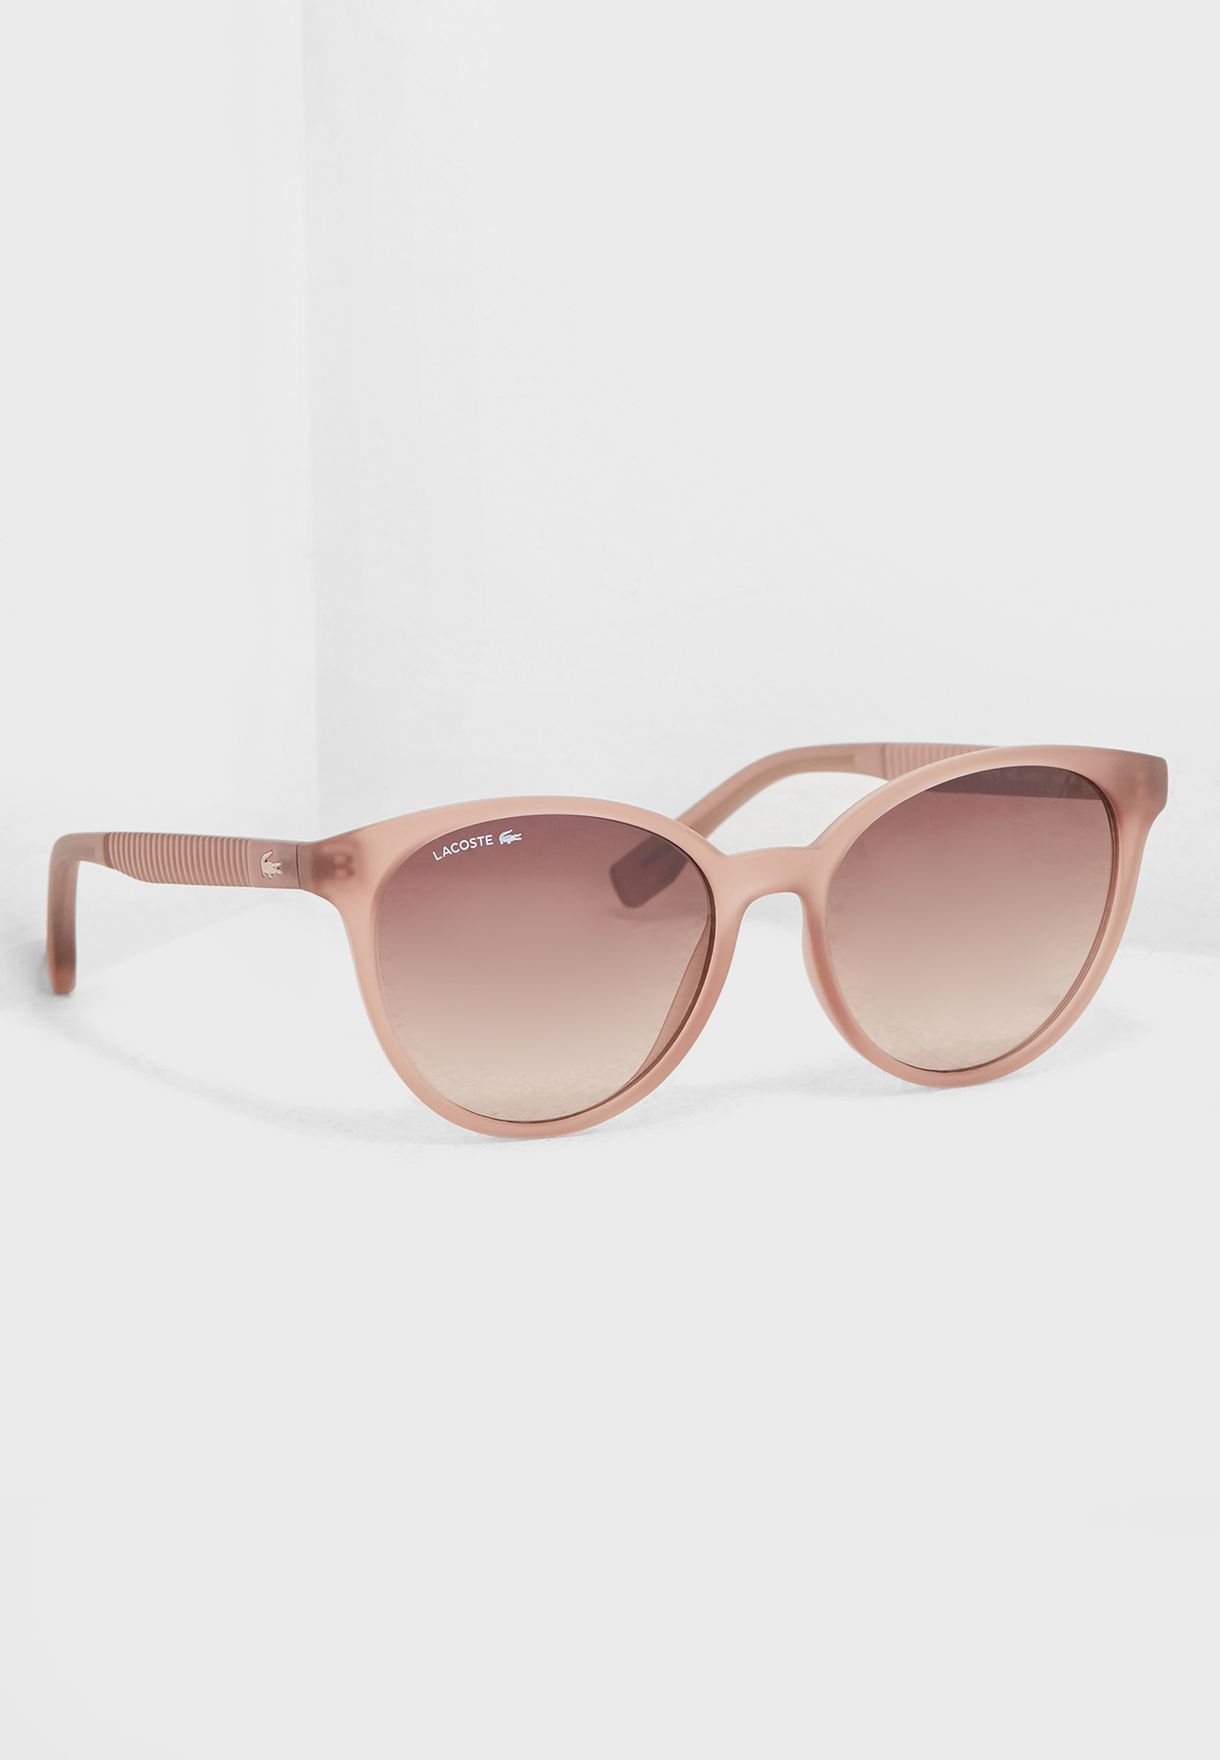 lacoste women's sunglasses